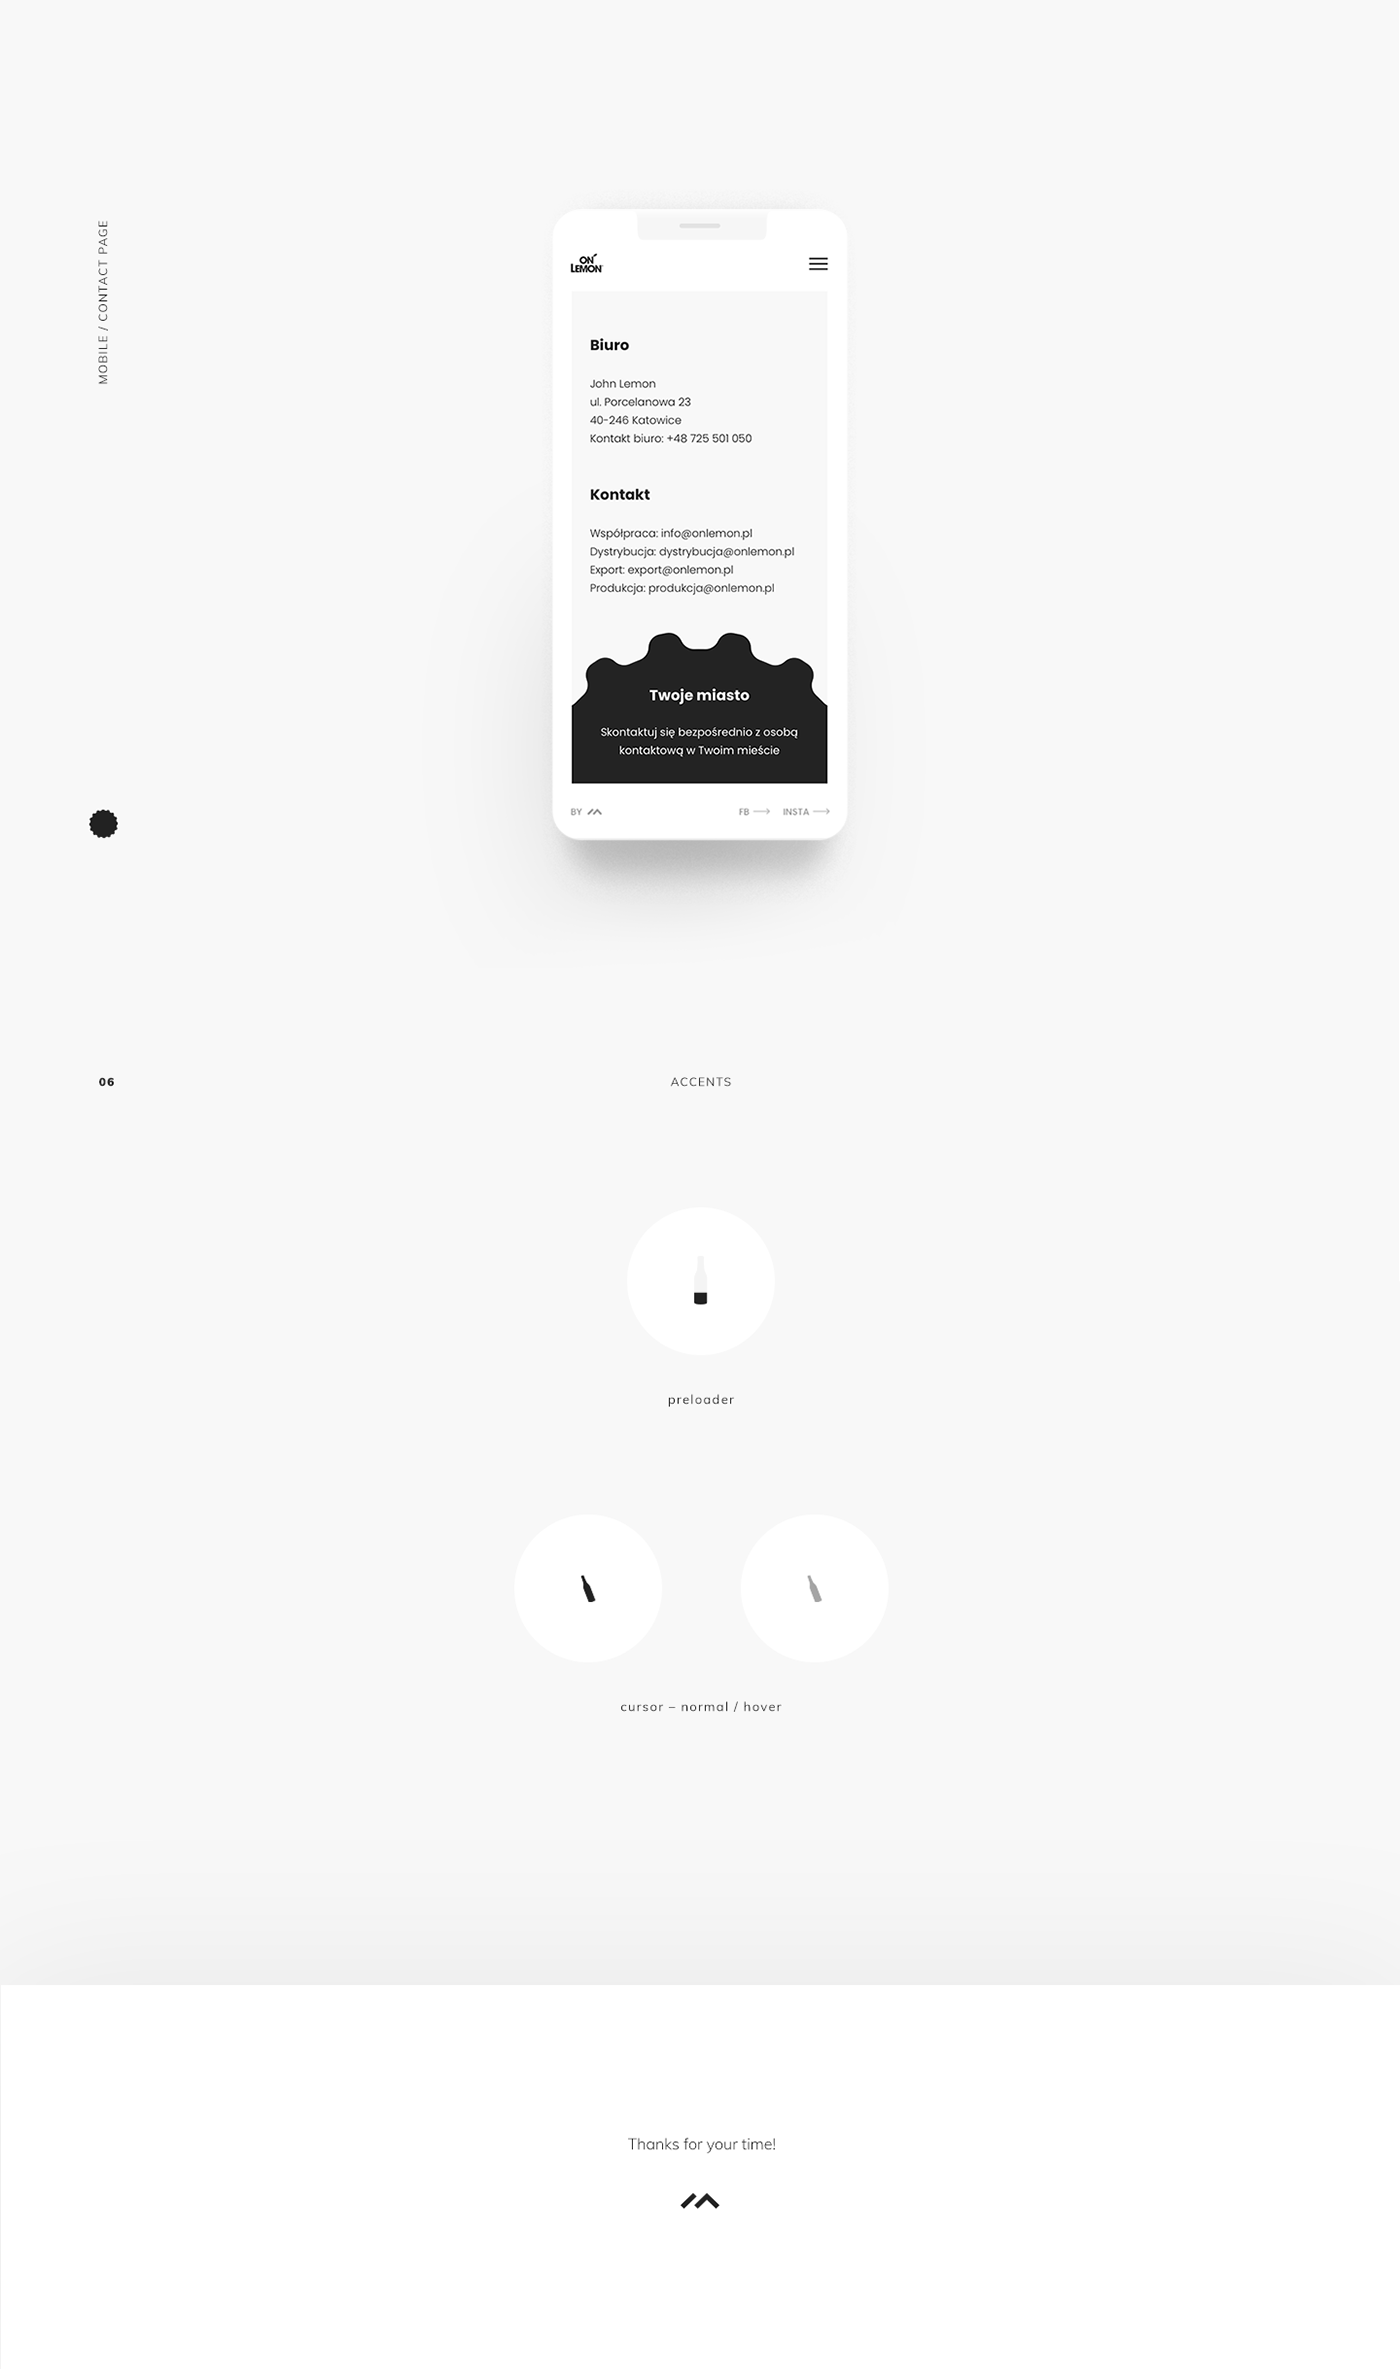 Interaction design  on lemon product design  UI ux Web Web Design  Website